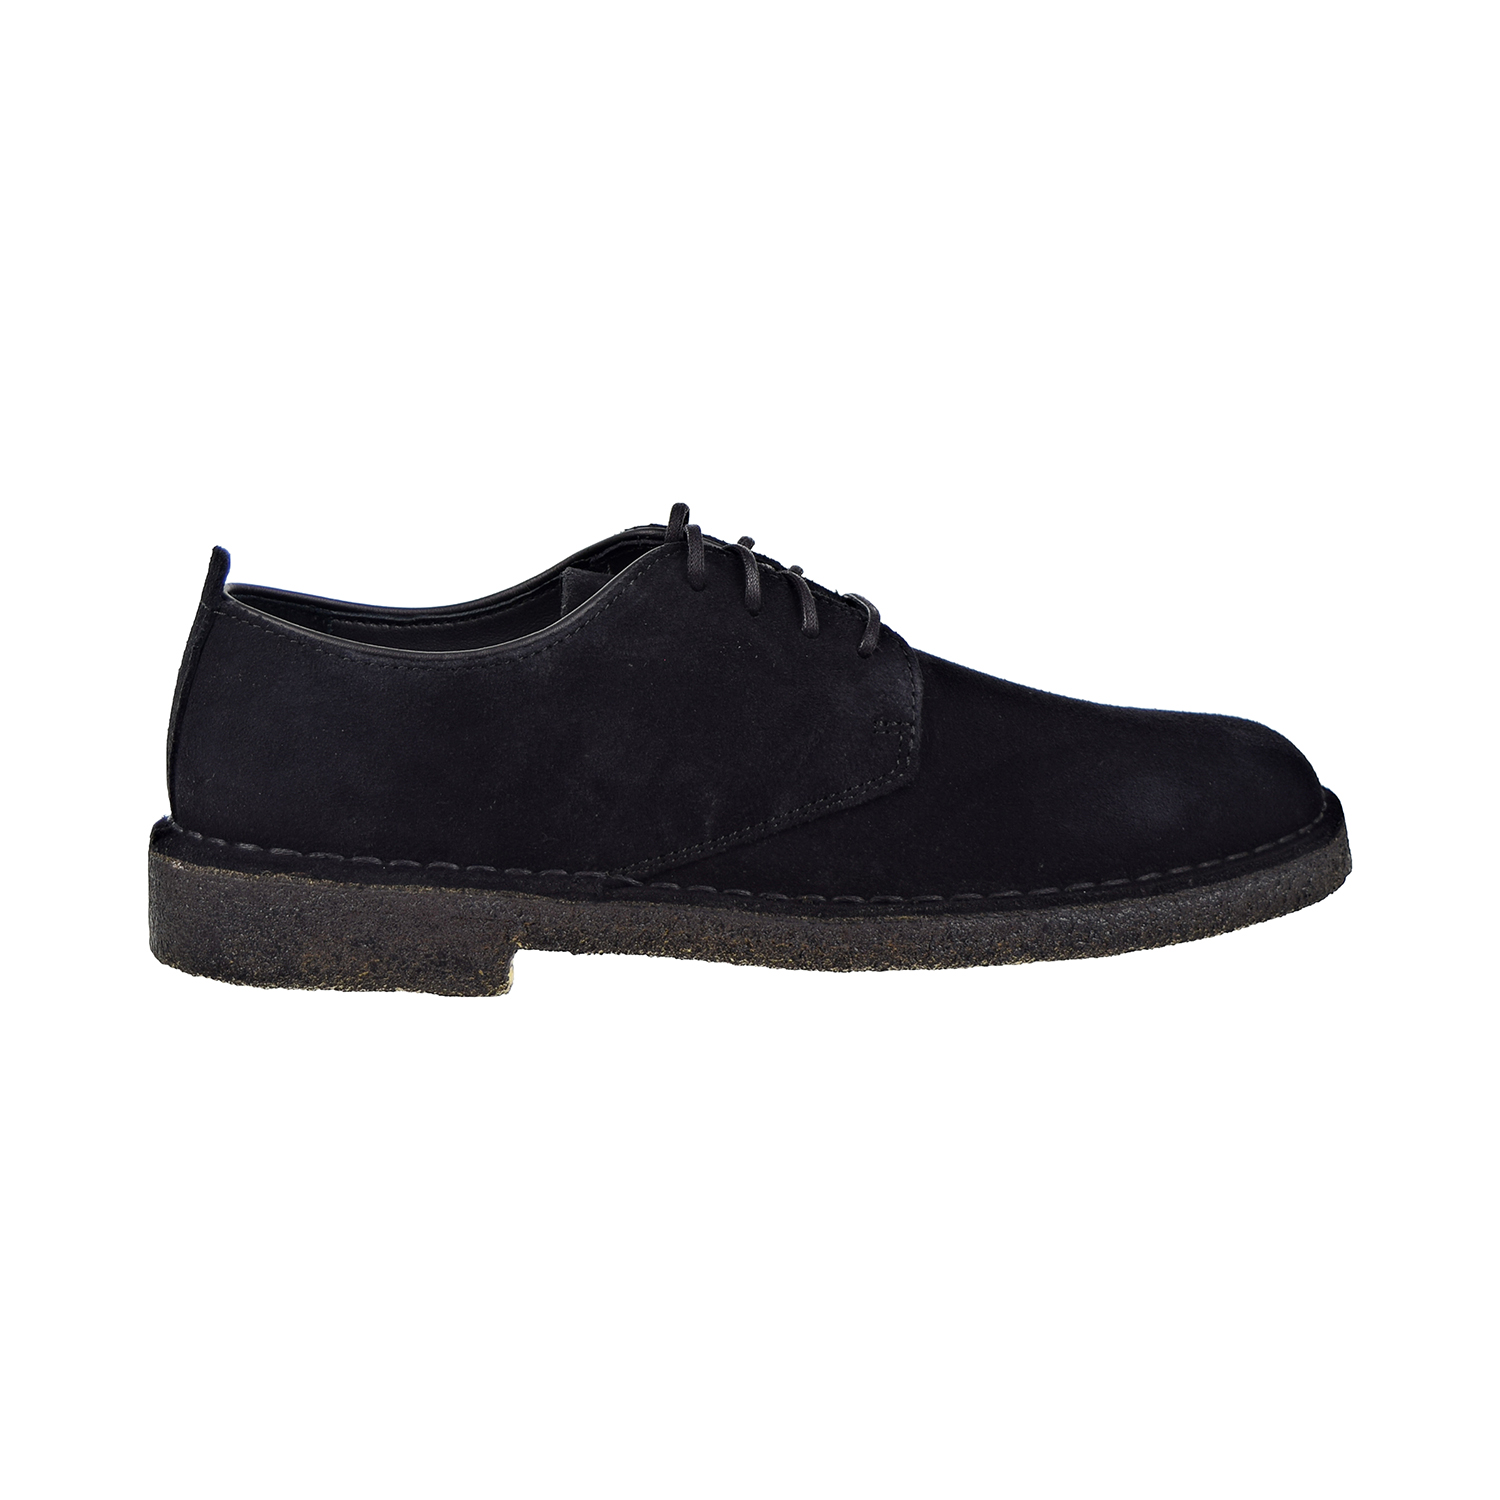 Clarks Originals Desert London Mens Shoes Black Suede 26133274 | eBay